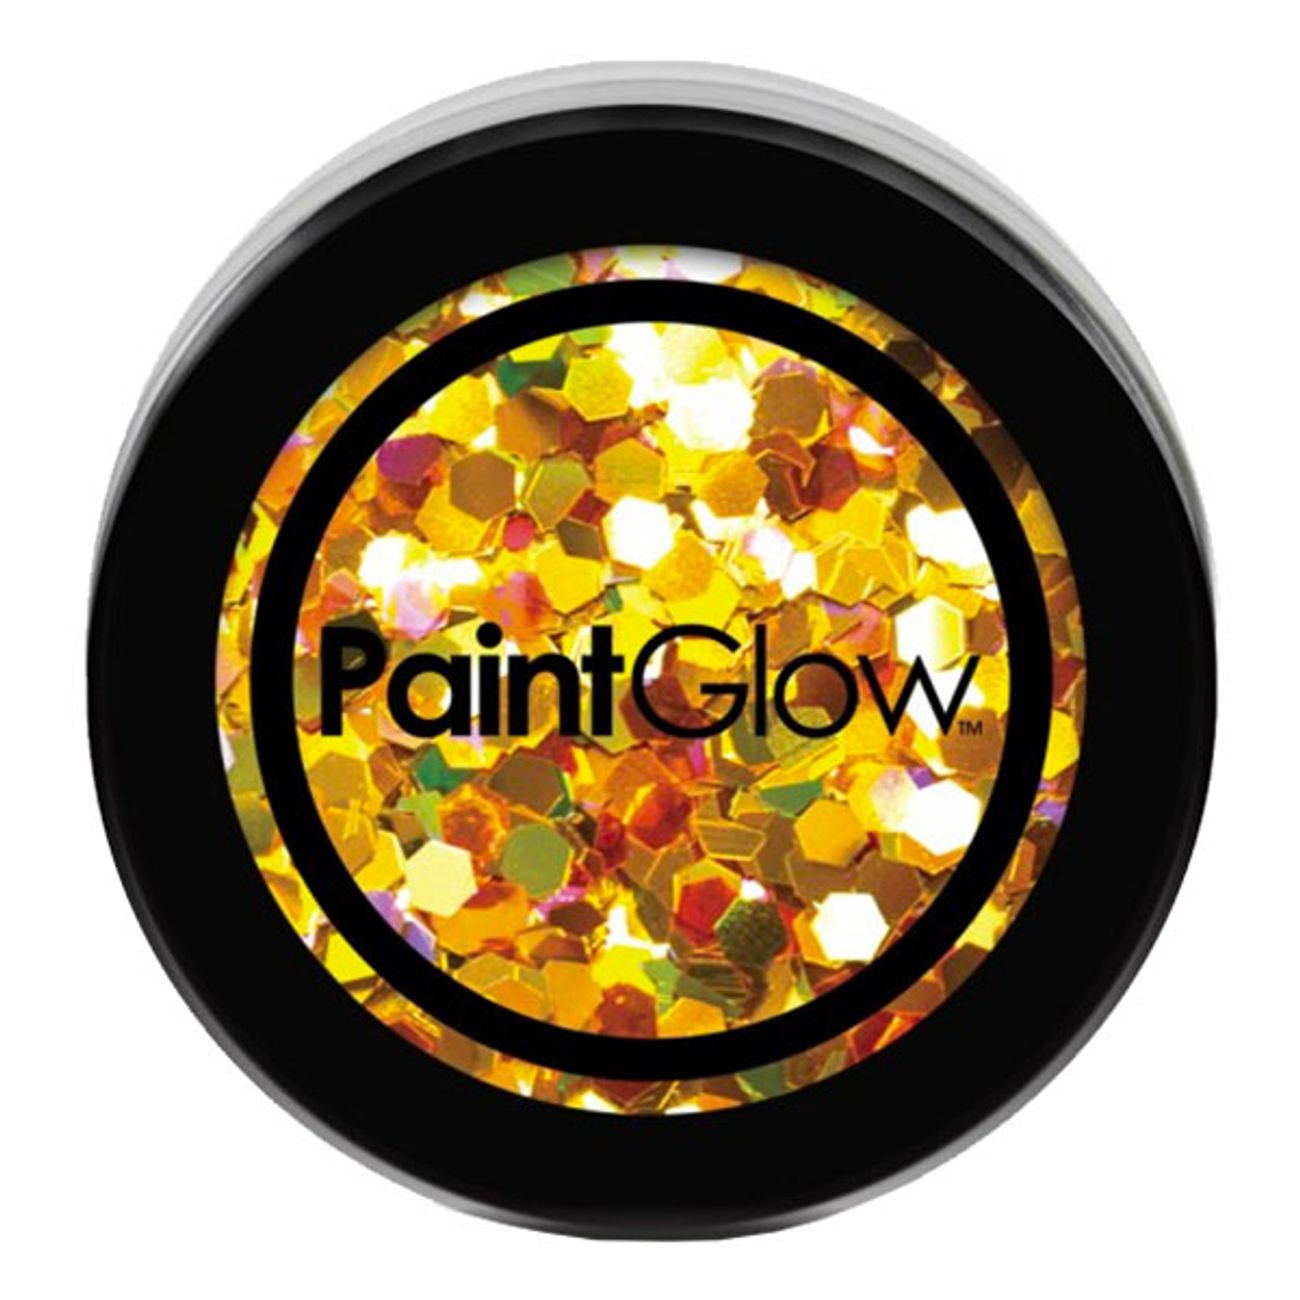 paintglow-holografisk-uv-glittergel-12